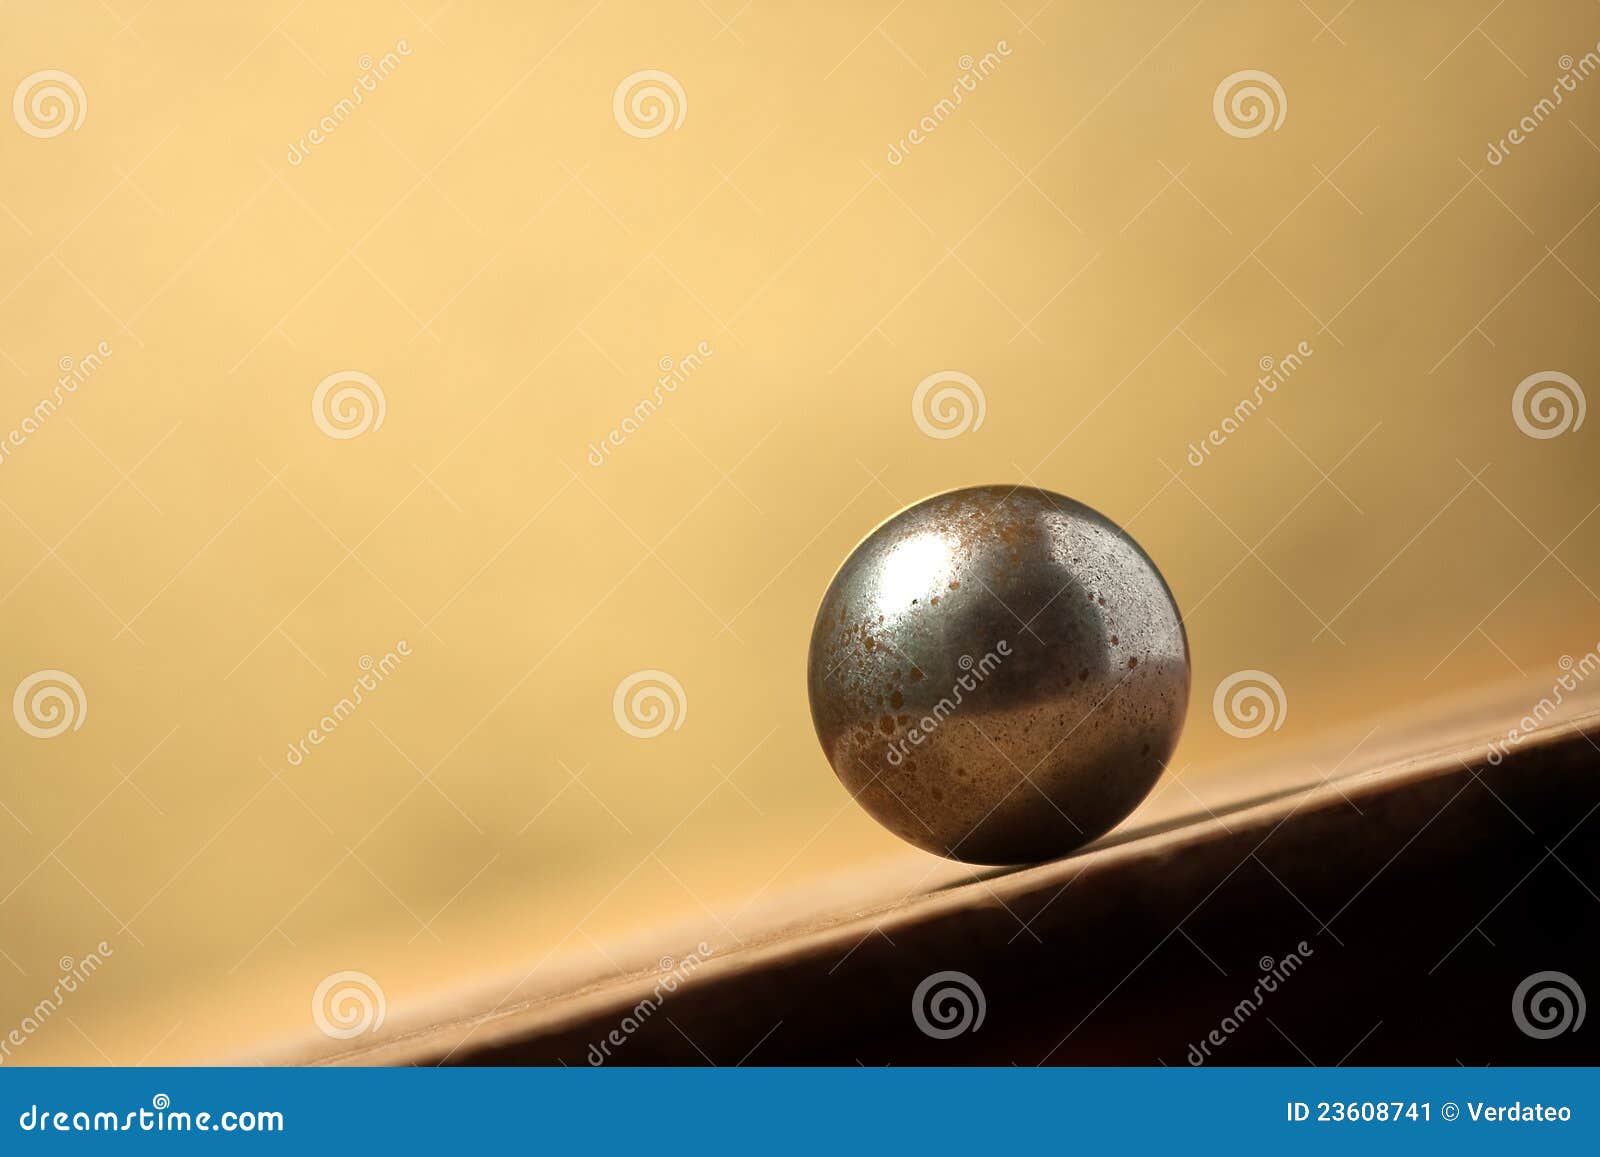 Metal Ball On Sloping Surface Stock Illustration - Image: 23608741